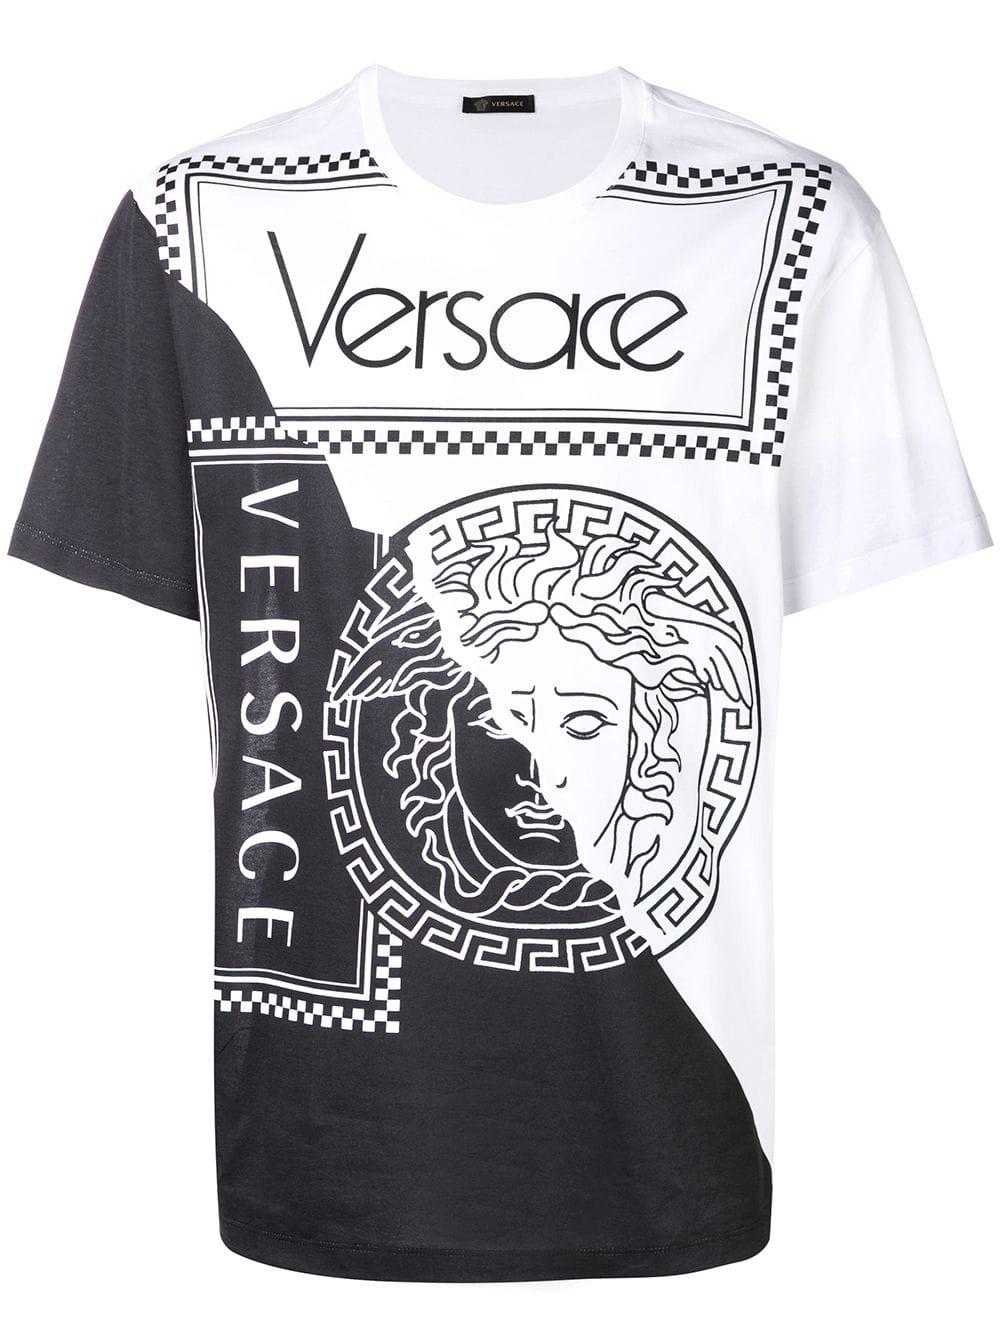 black and white versace t shirt